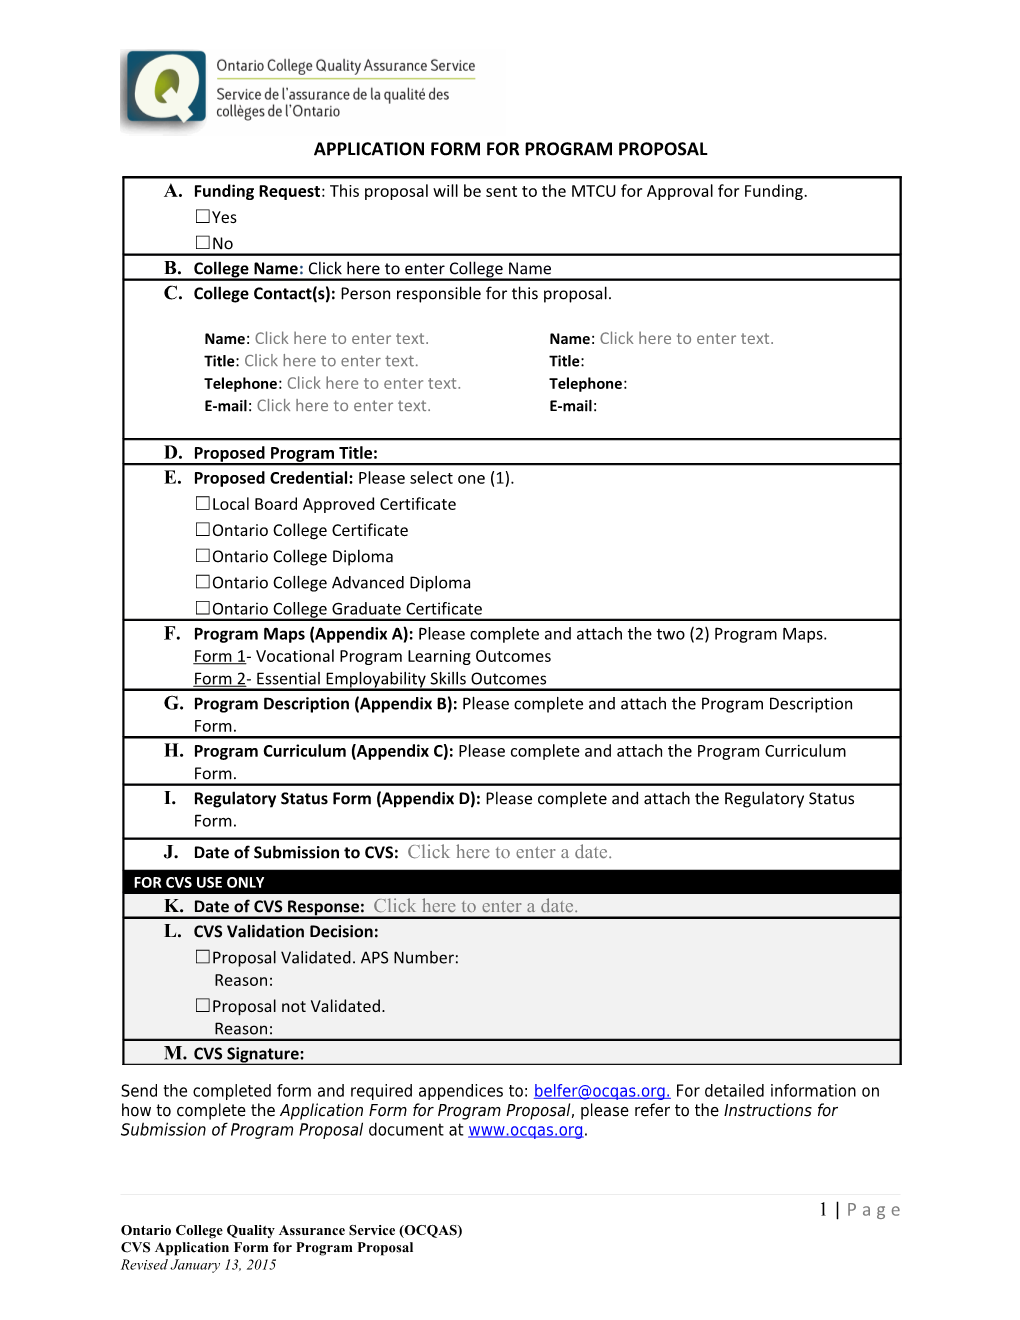 Application Form for Program Proposal